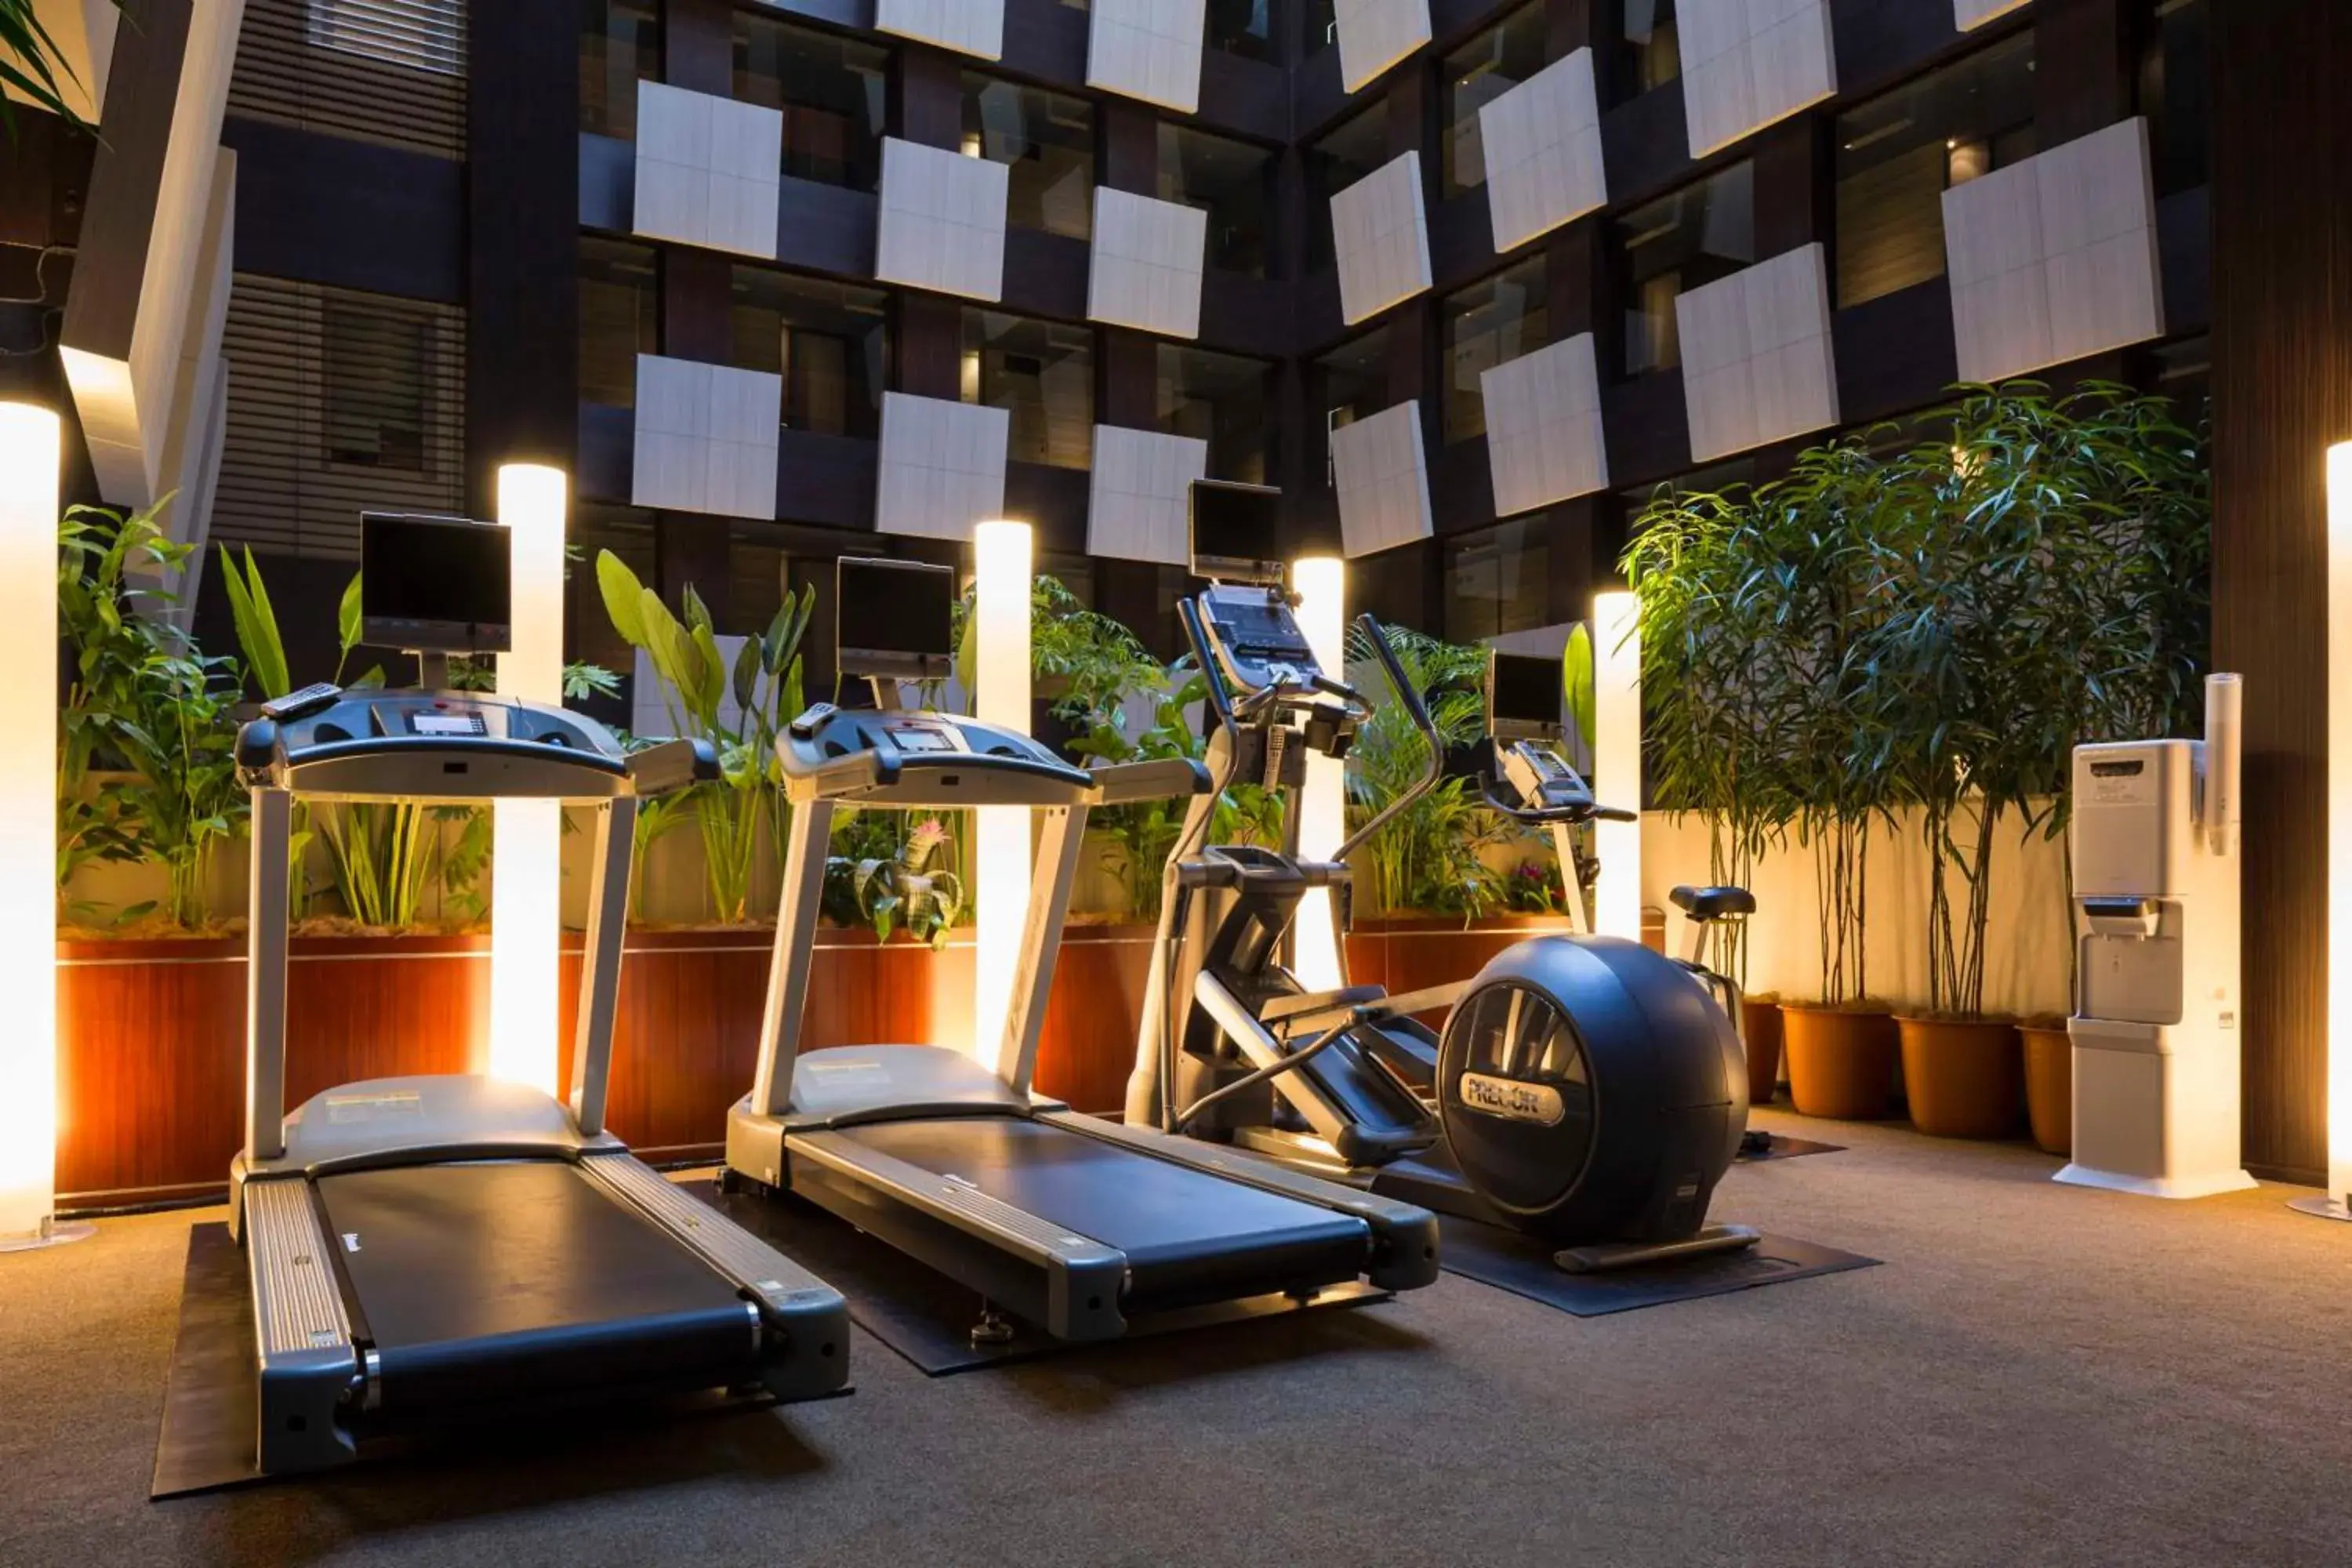 Fitness centre/facilities, Fitness Center/Facilities in Hotel Metropolitan Marunouchi